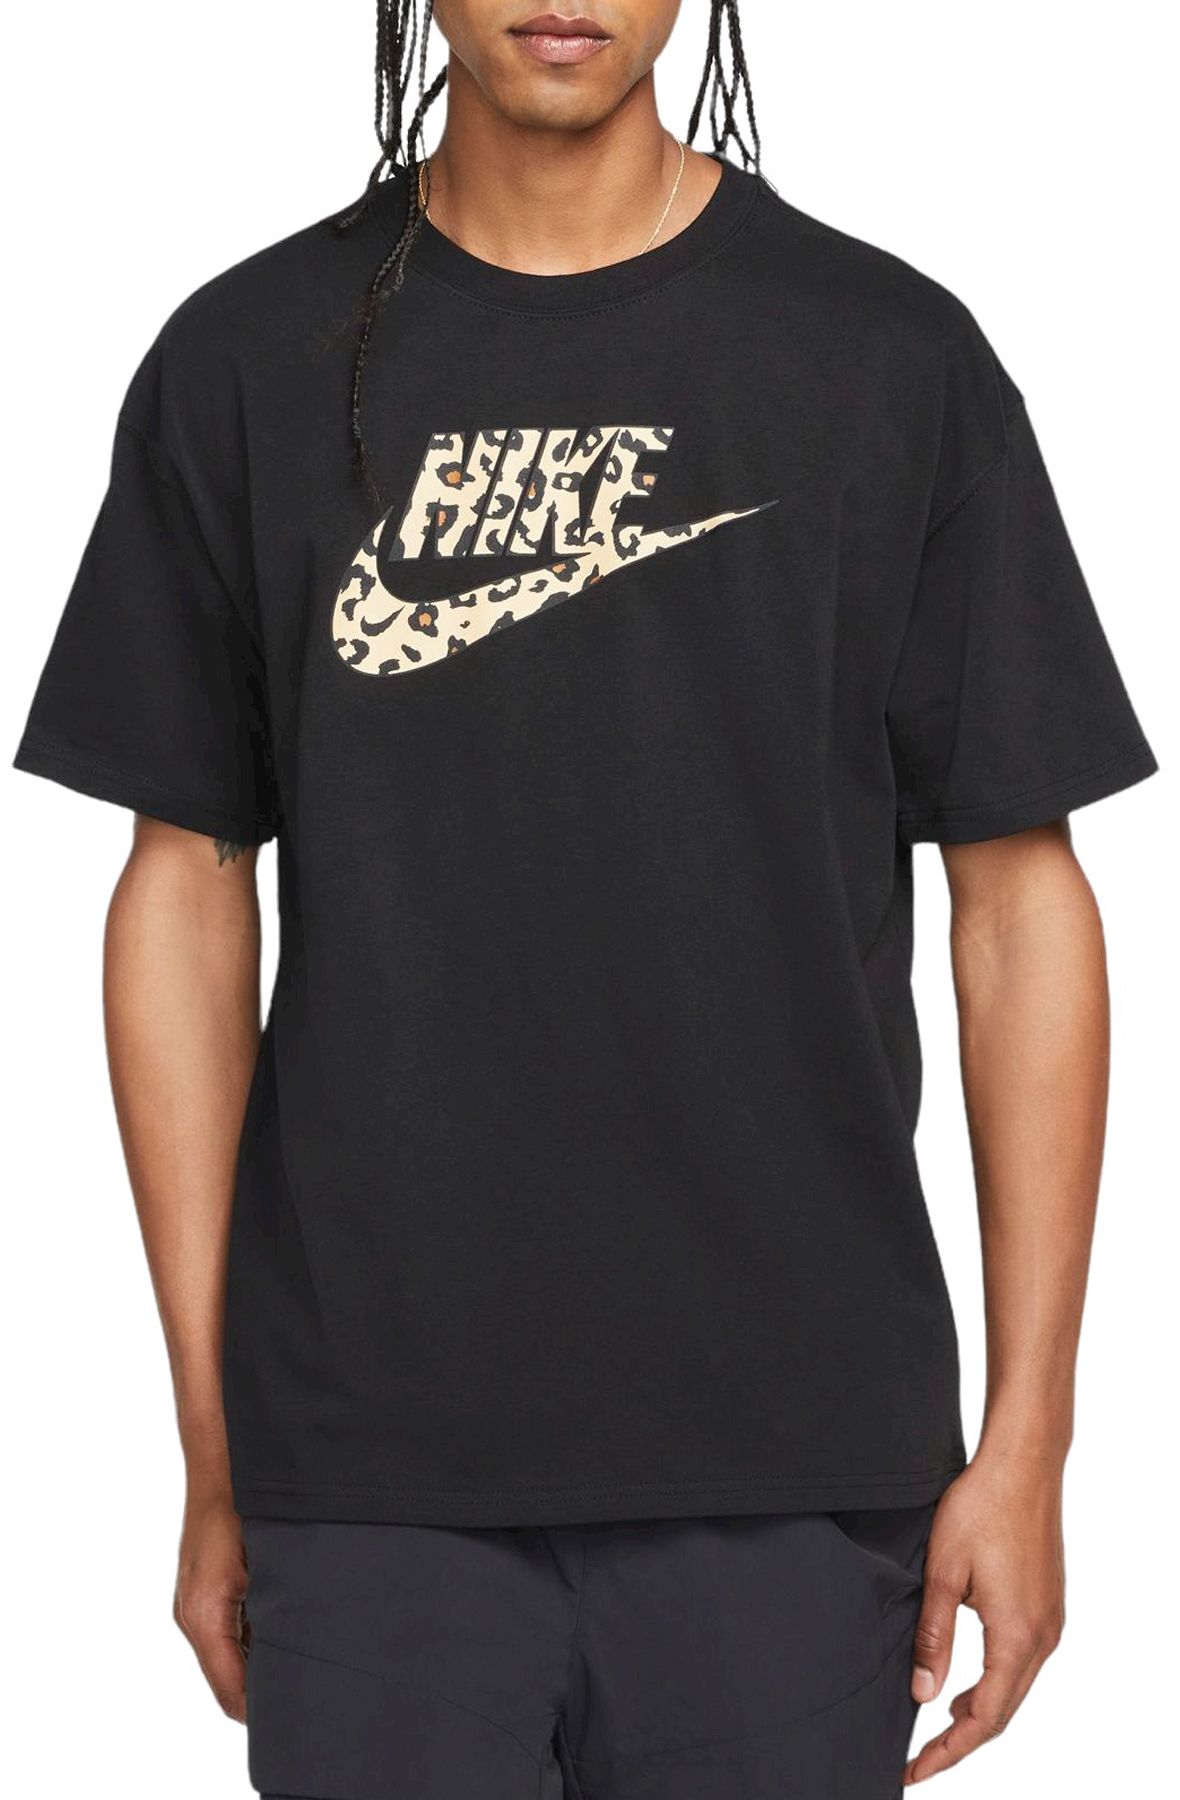 NIKE Sportswear City Made T-Shirt DM6375 010 - Shiekh